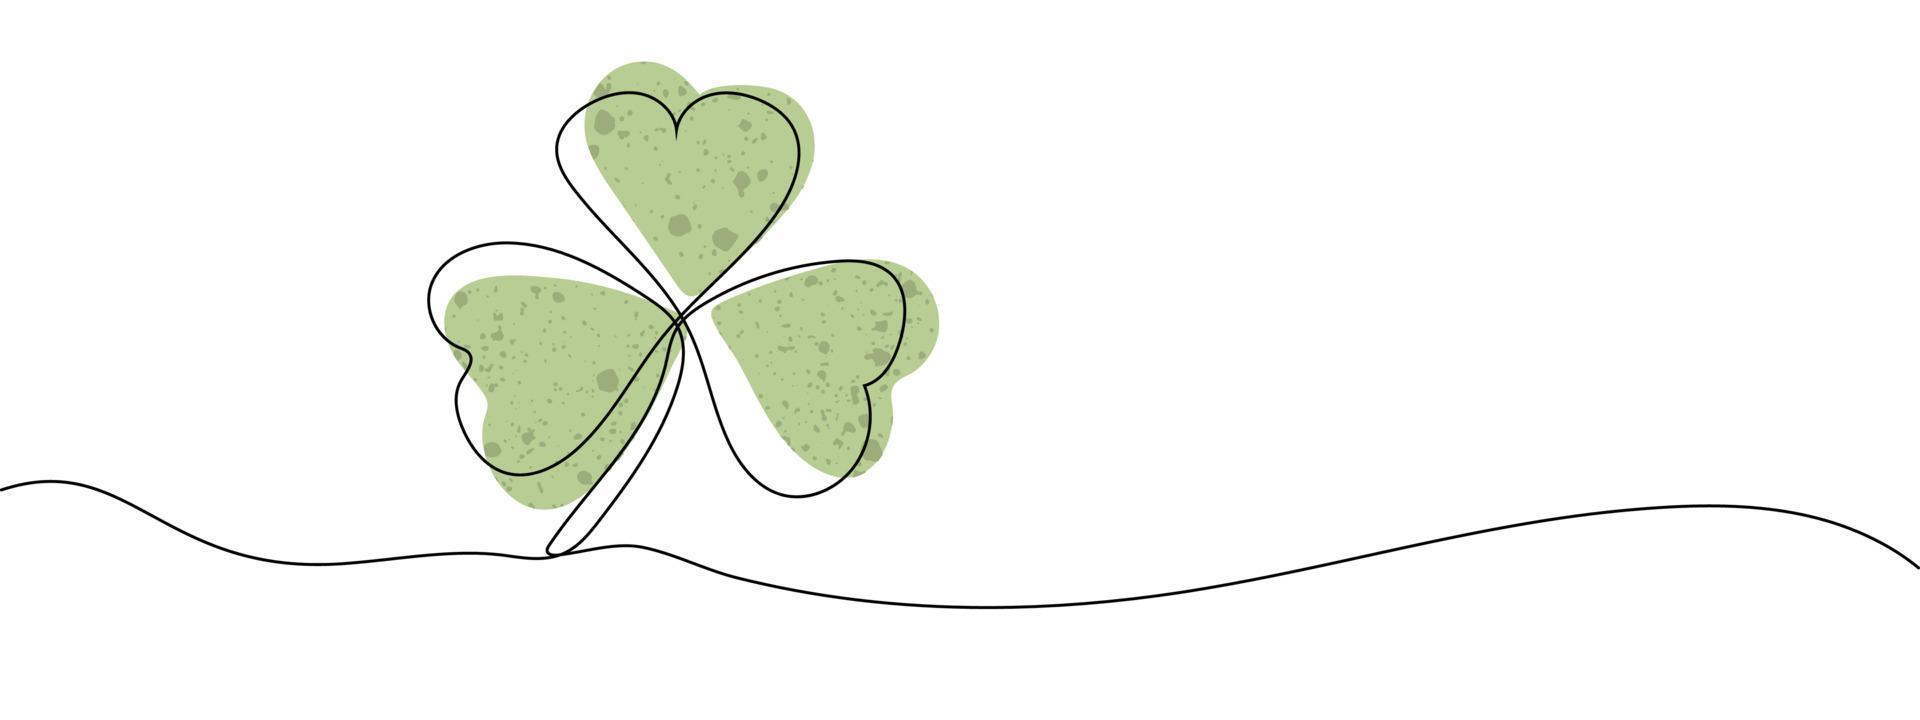 Clover three leaf line art vector